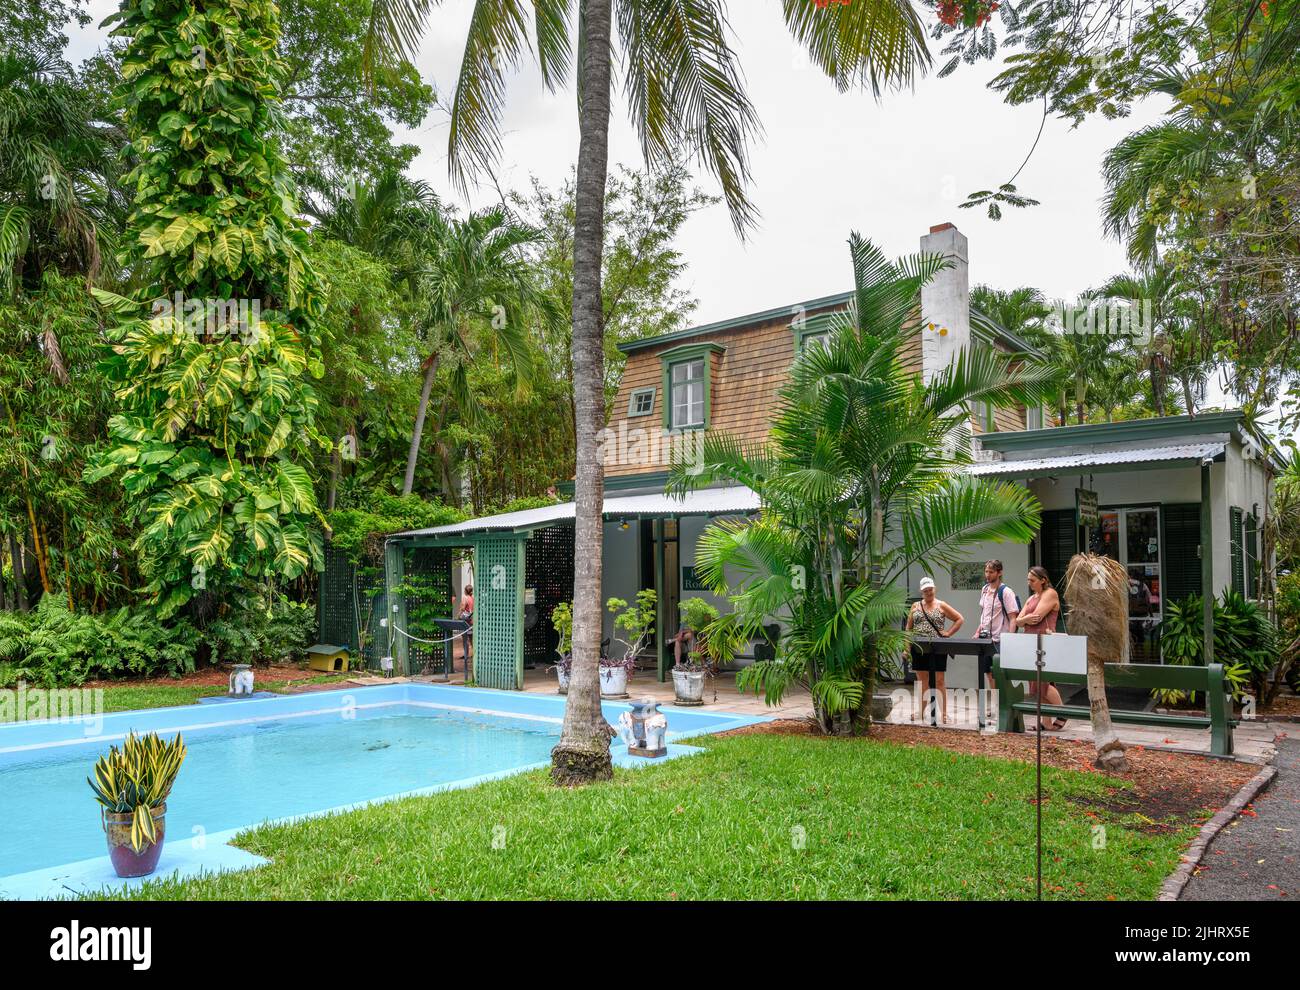 The Hemingway Home and Museum, Whitehead Street, Key West, Florida Keys, Florida, USA Stockfoto